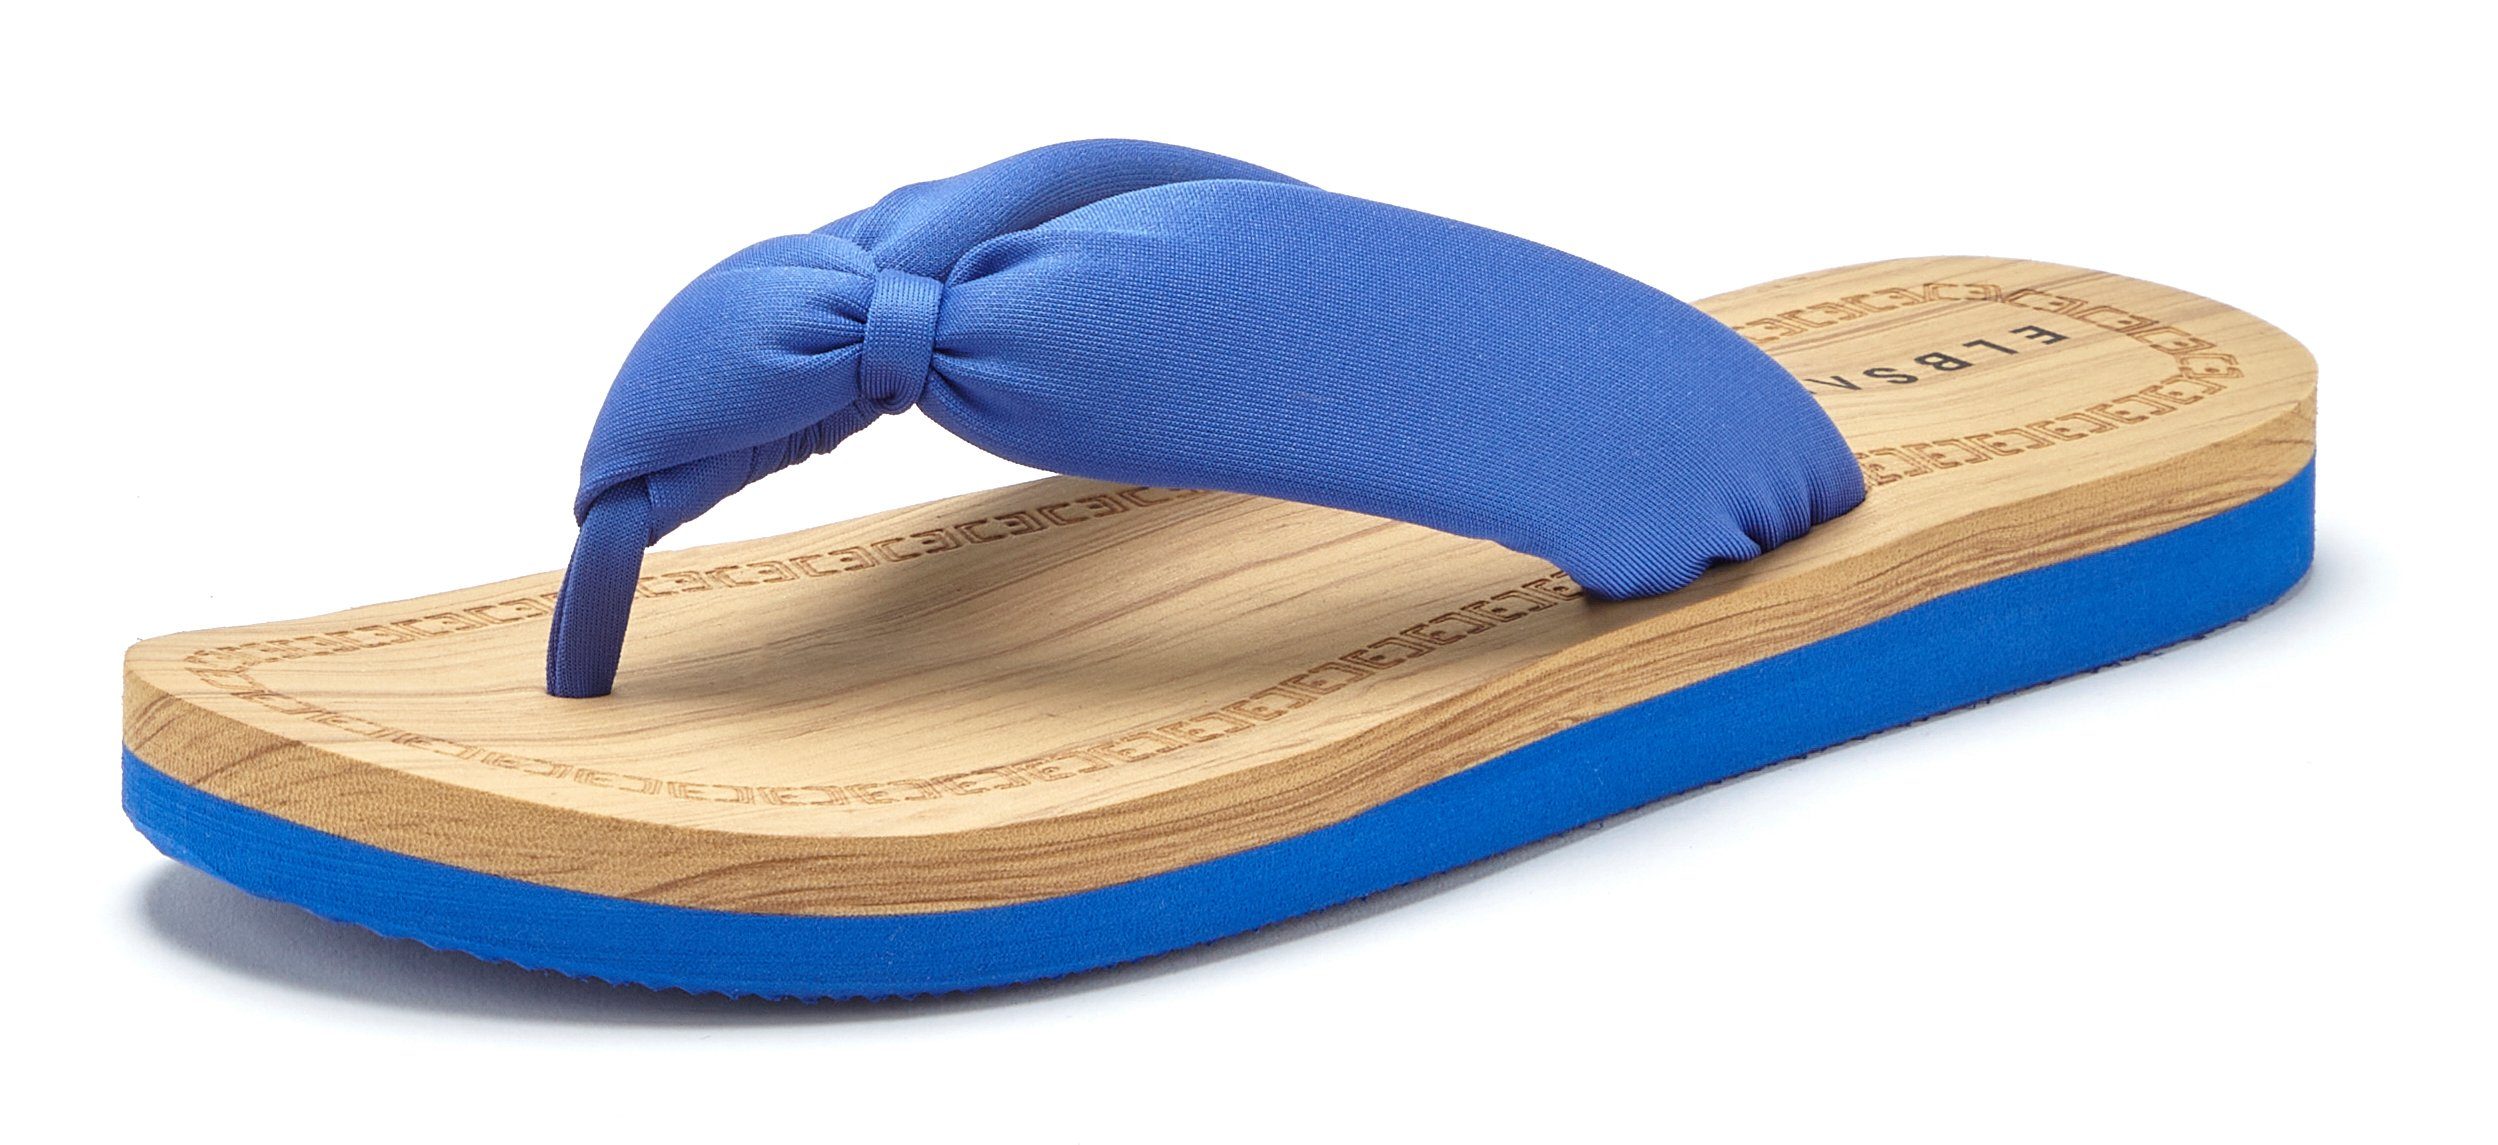 Elbsand Badezehentrenner Sandale, Badeschuh Pantolette, ultraleicht blau VEGAN